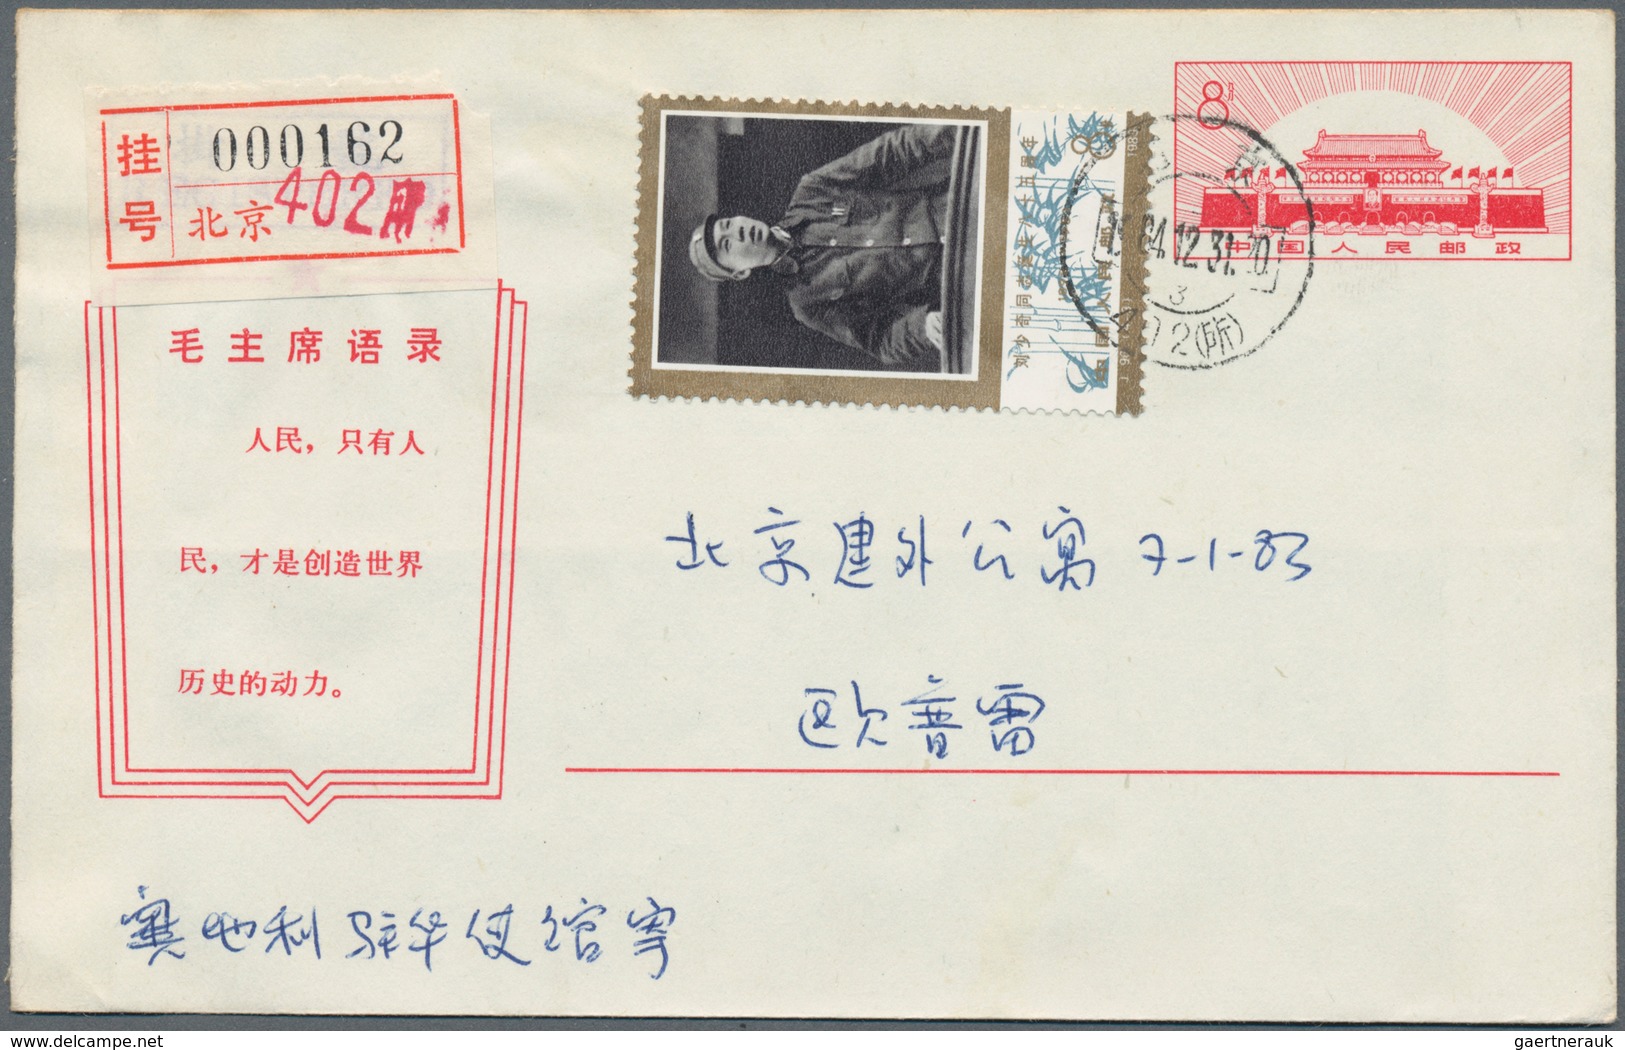 China - Volksrepublik - Ganzsachen: 1967, cultural revolution stationery envelopes with slogans, a c